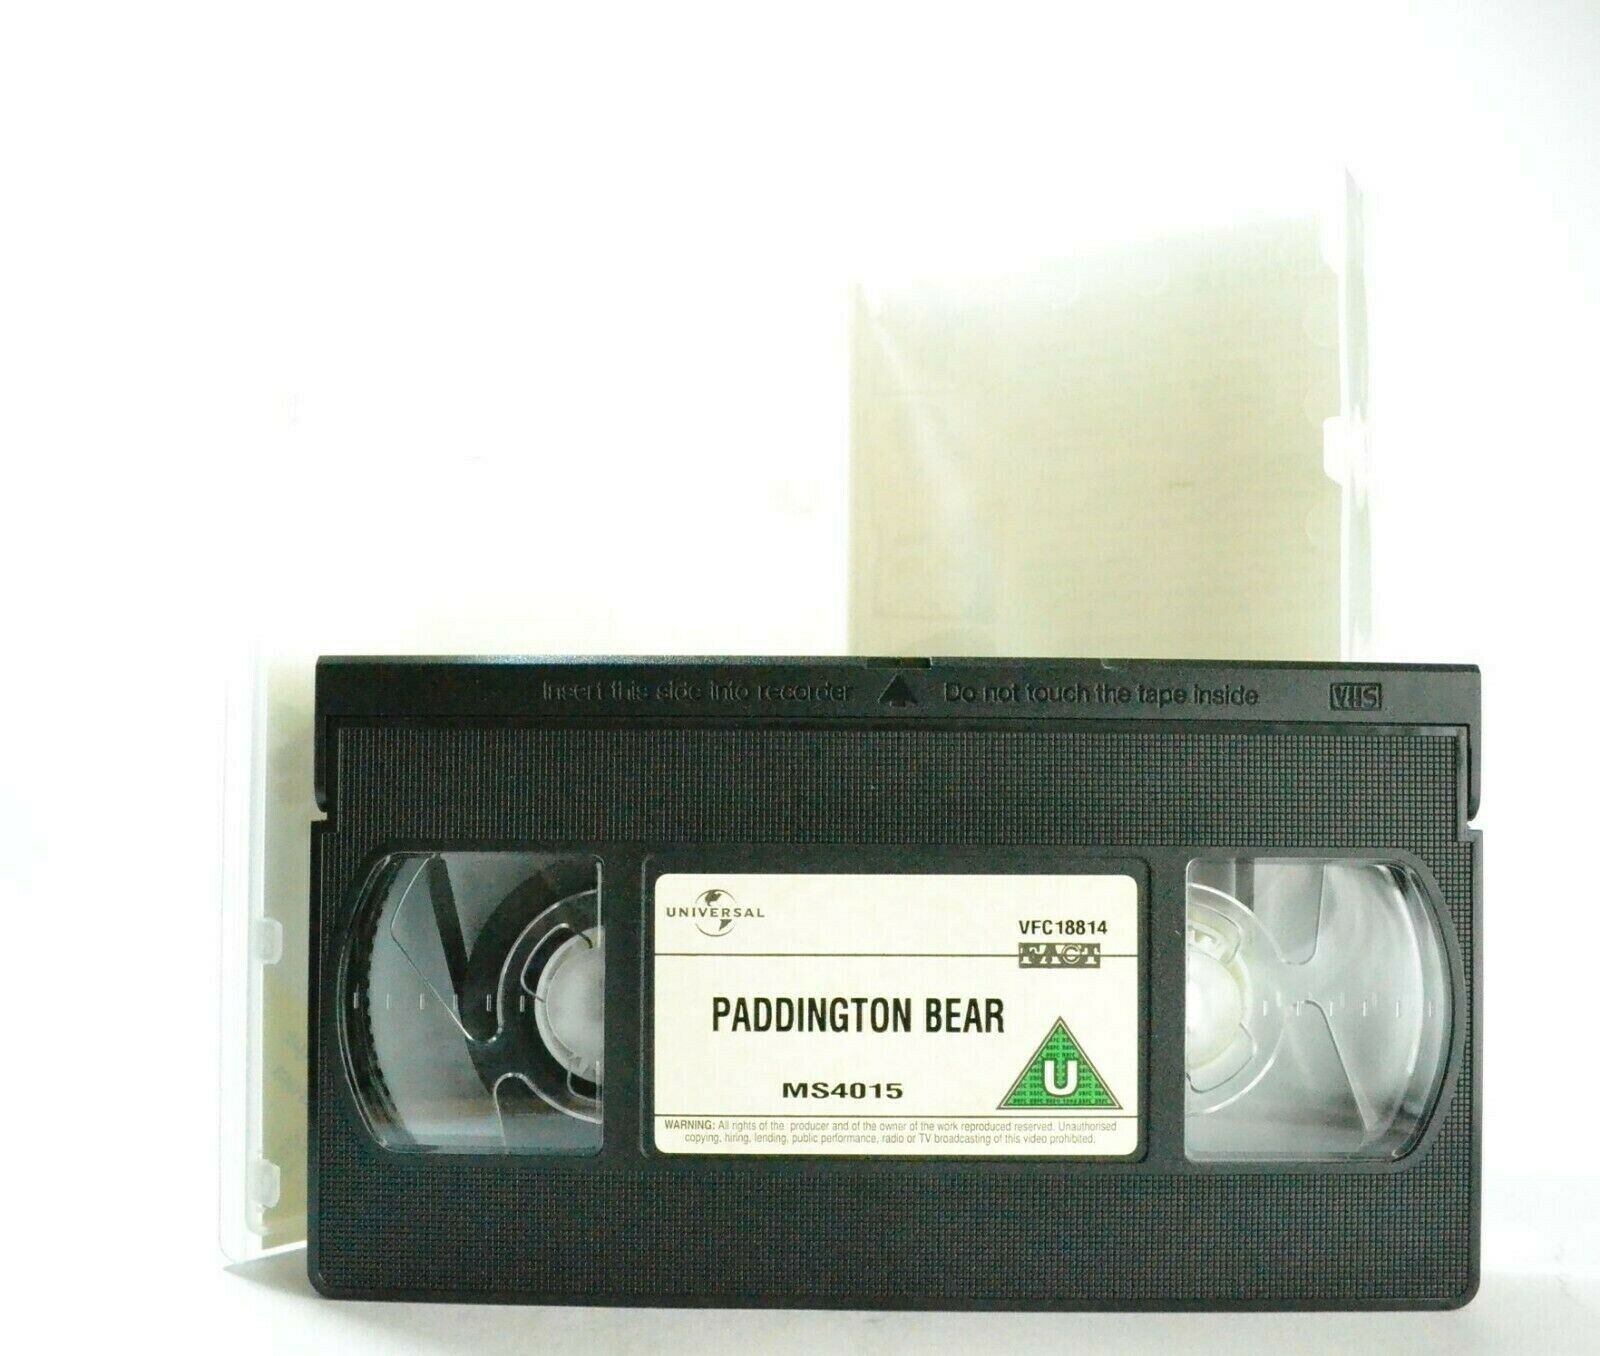 Paddington: 10 Episodes On 1 Tape - Marks & Spencer Collection - Kids - Pal VHS-